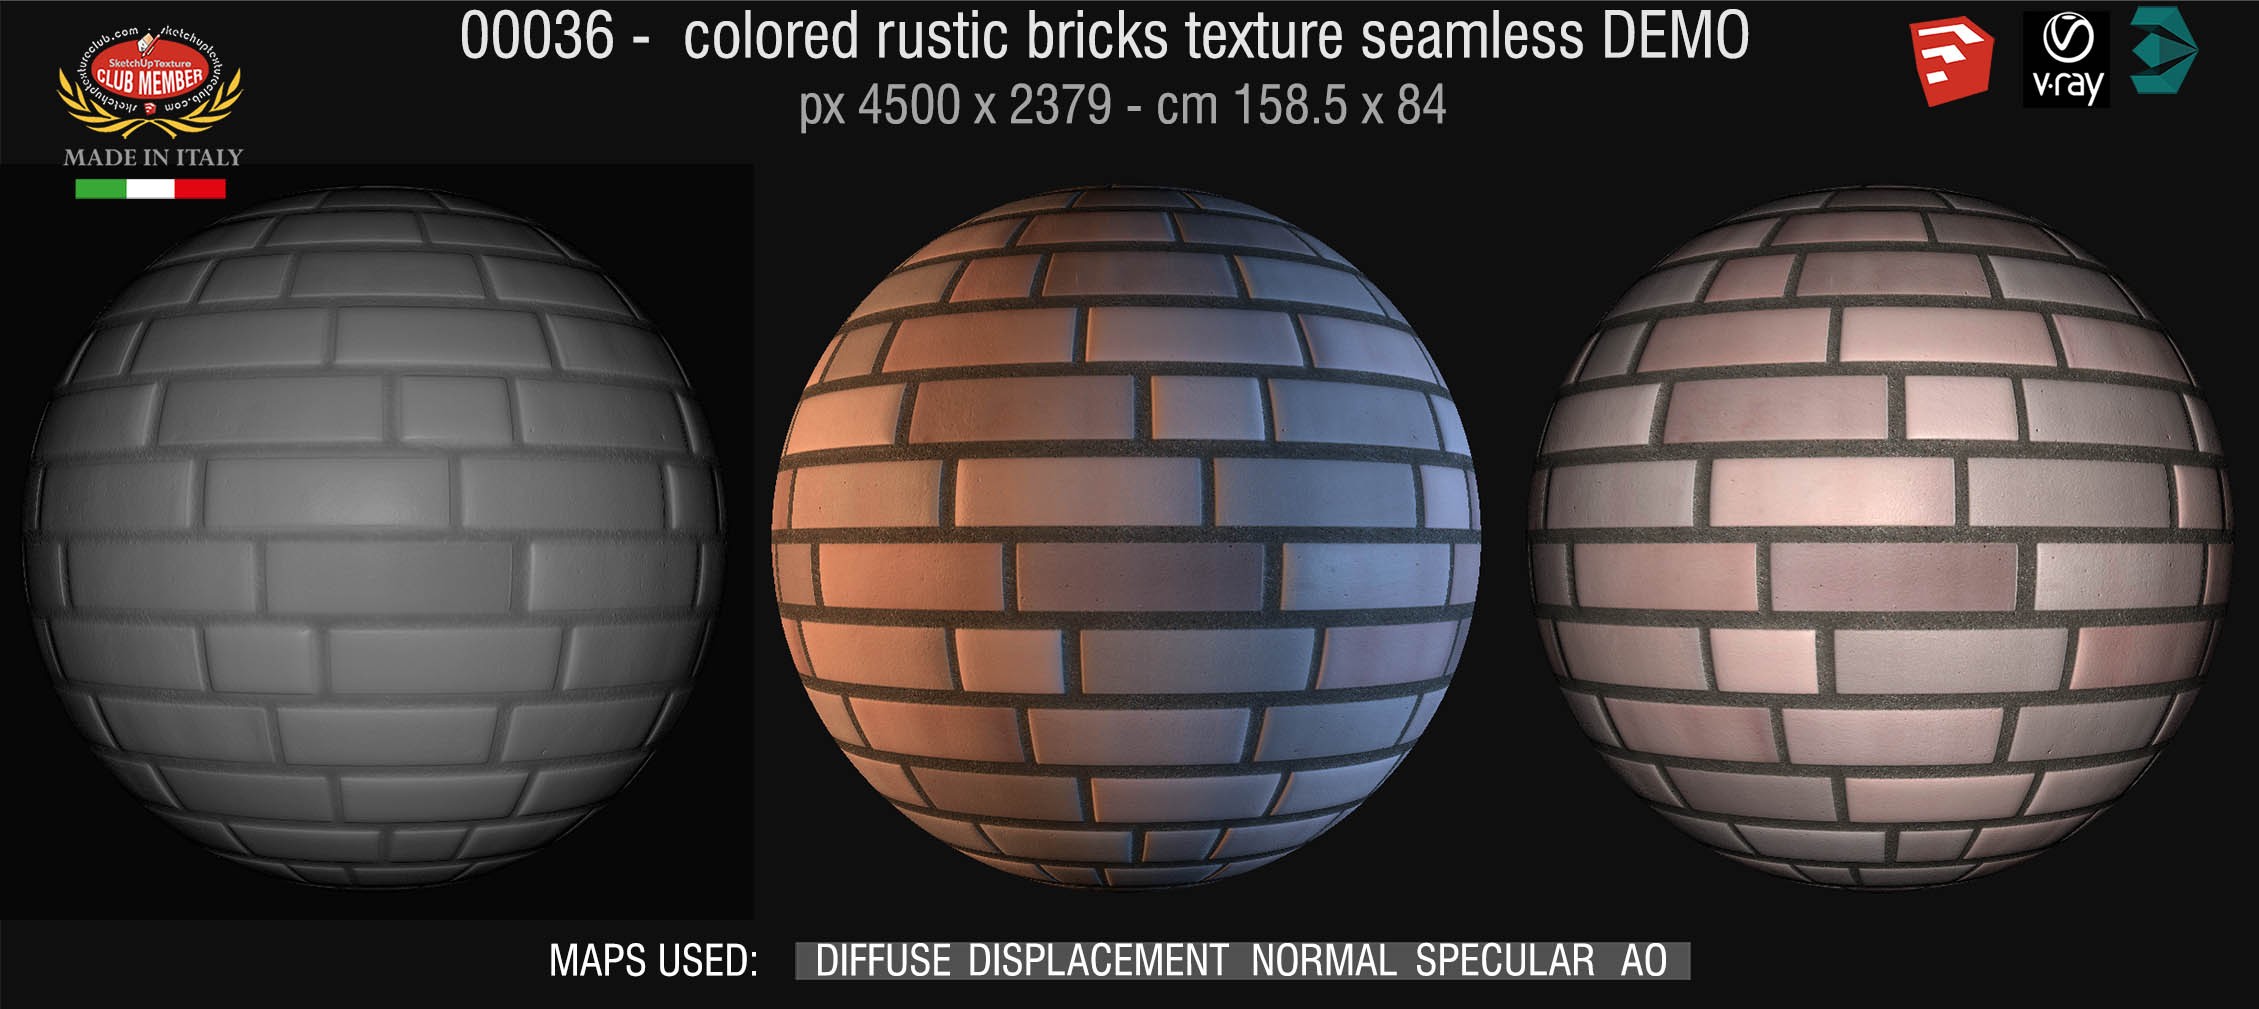 00036 colored rustic bricks texture seamless + maps DEMO